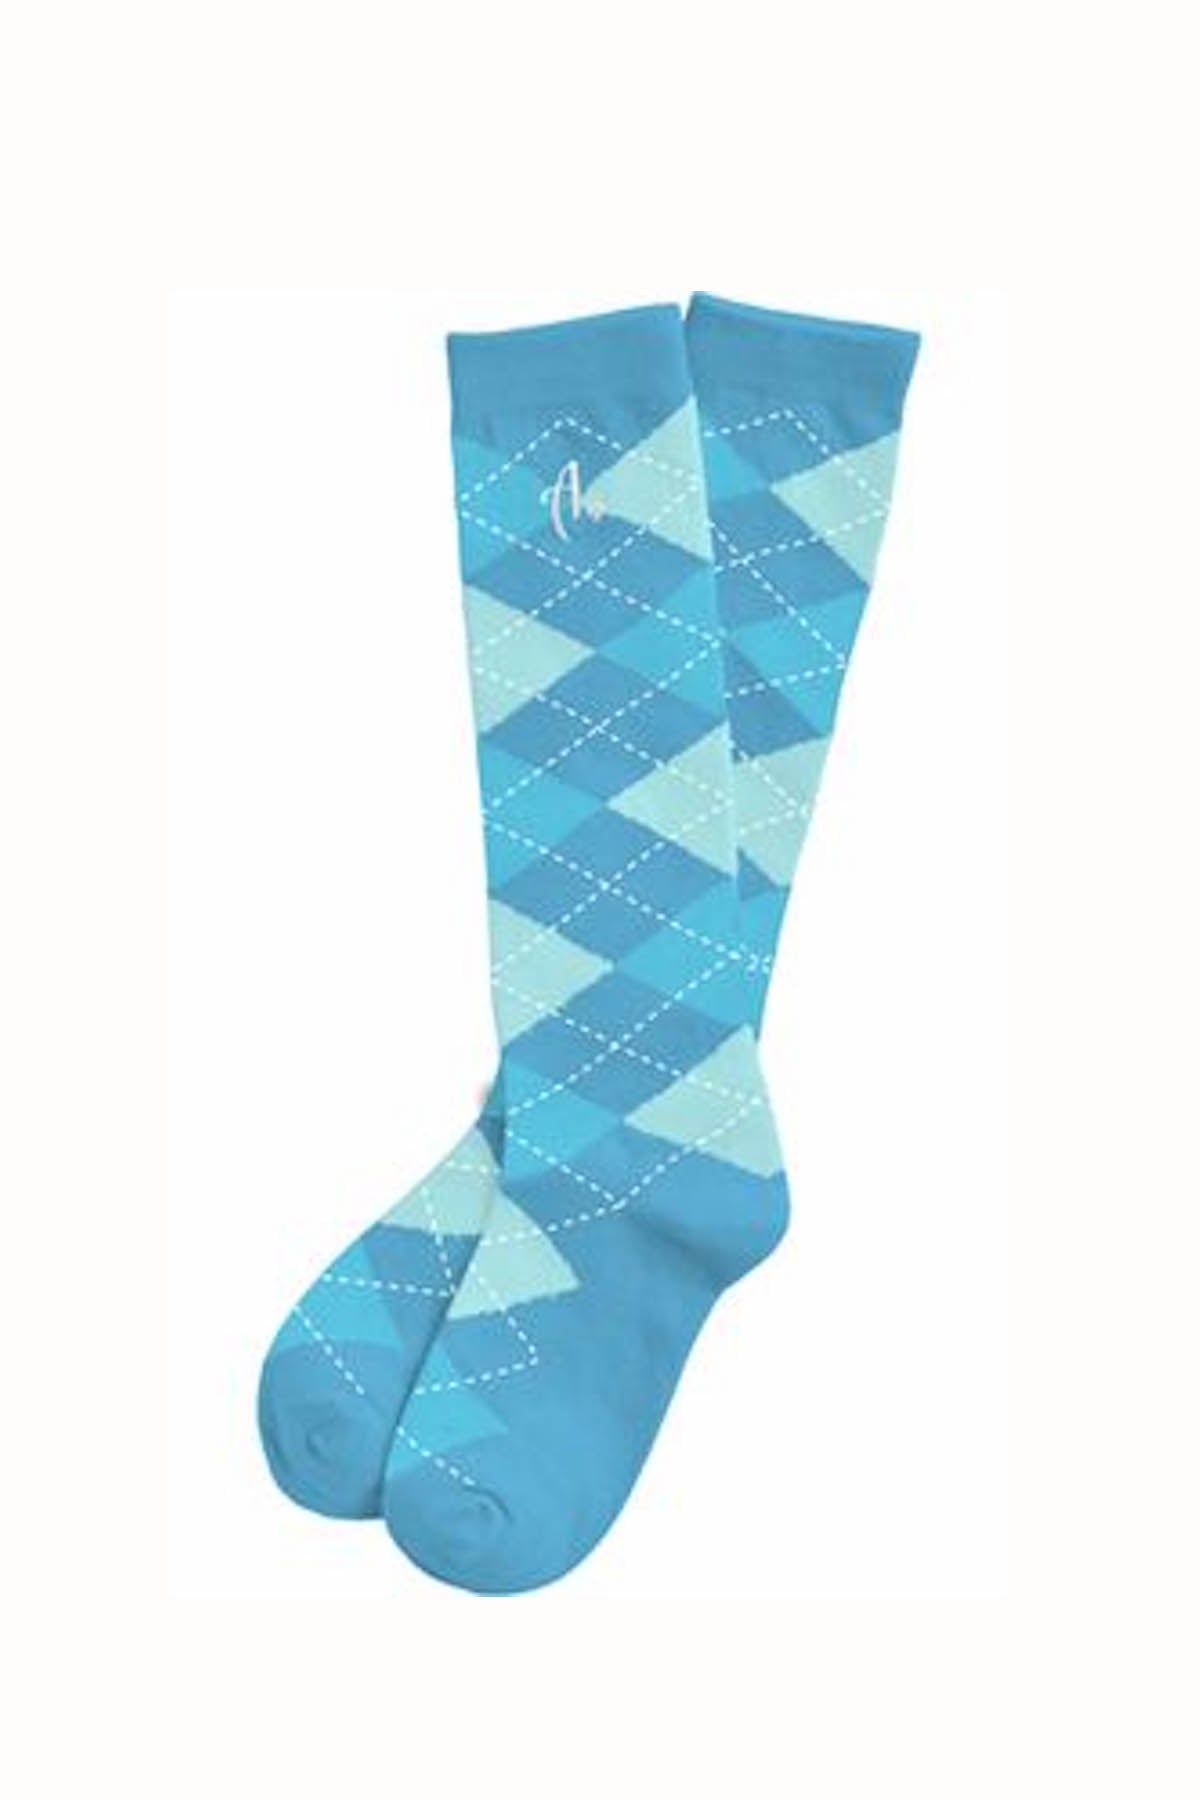 Argoz Blue Bird Knee-High Socks